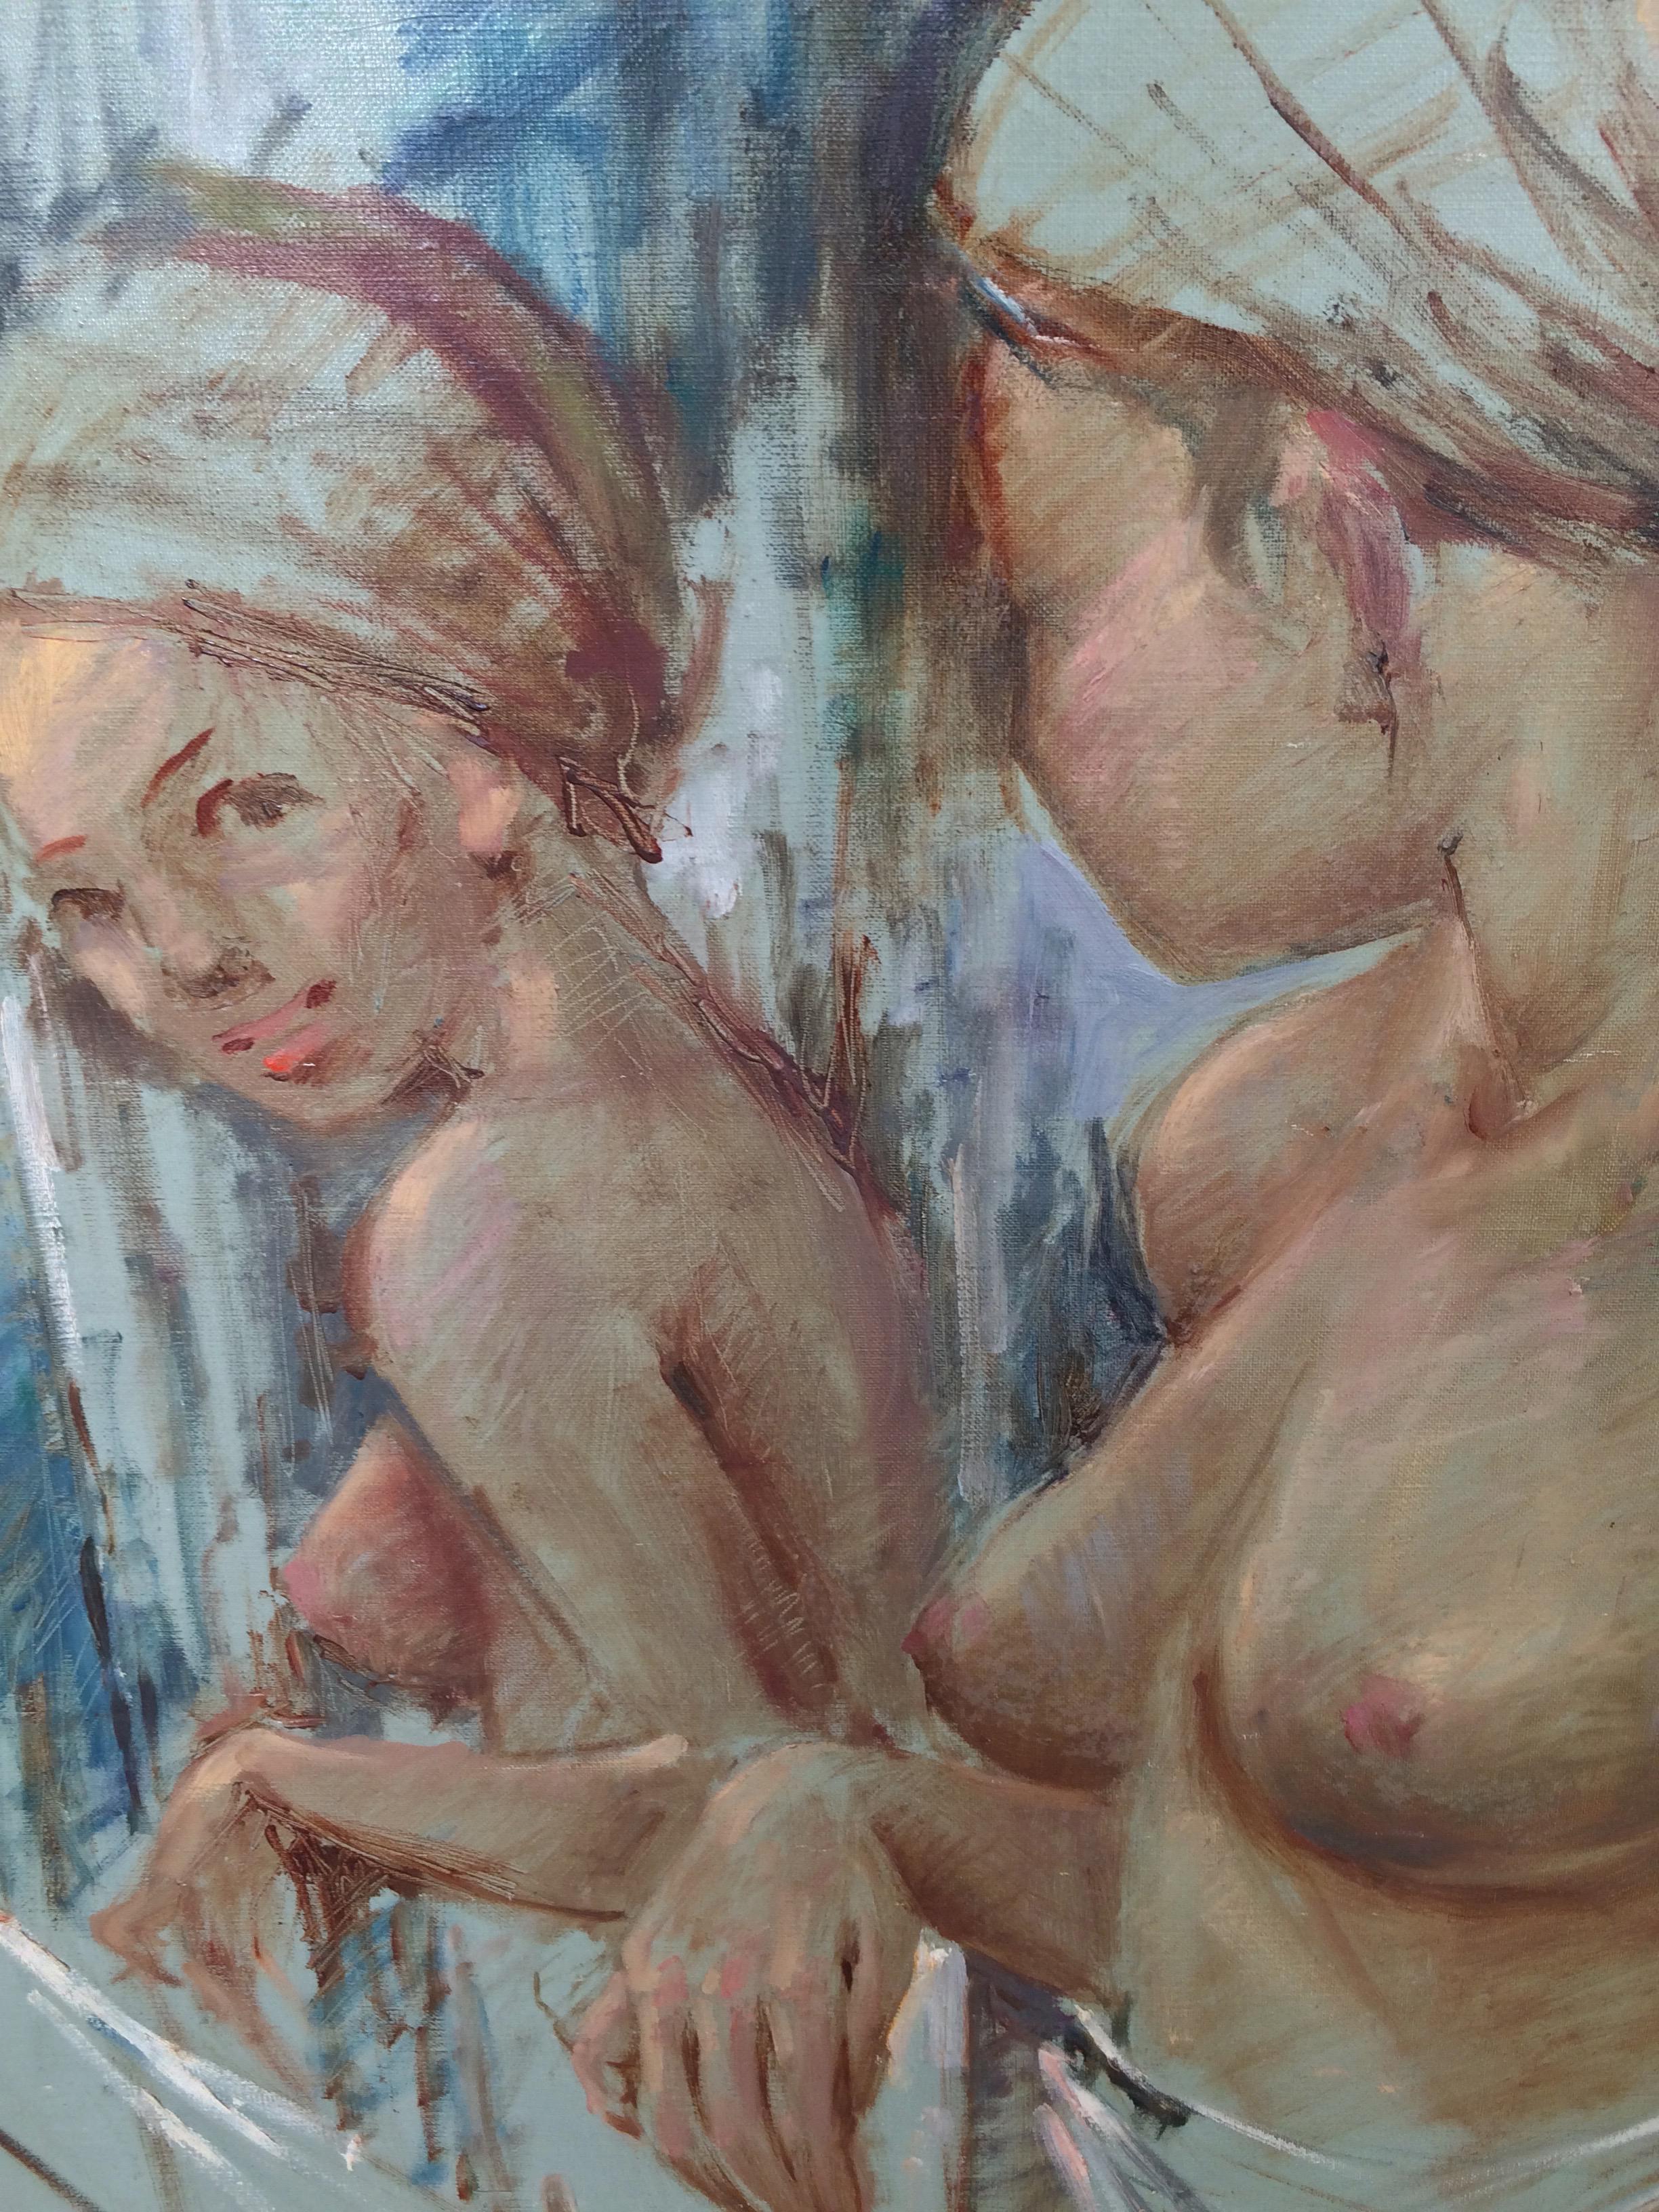 V. Warrami; Mirror reflection; oil on canvas 2